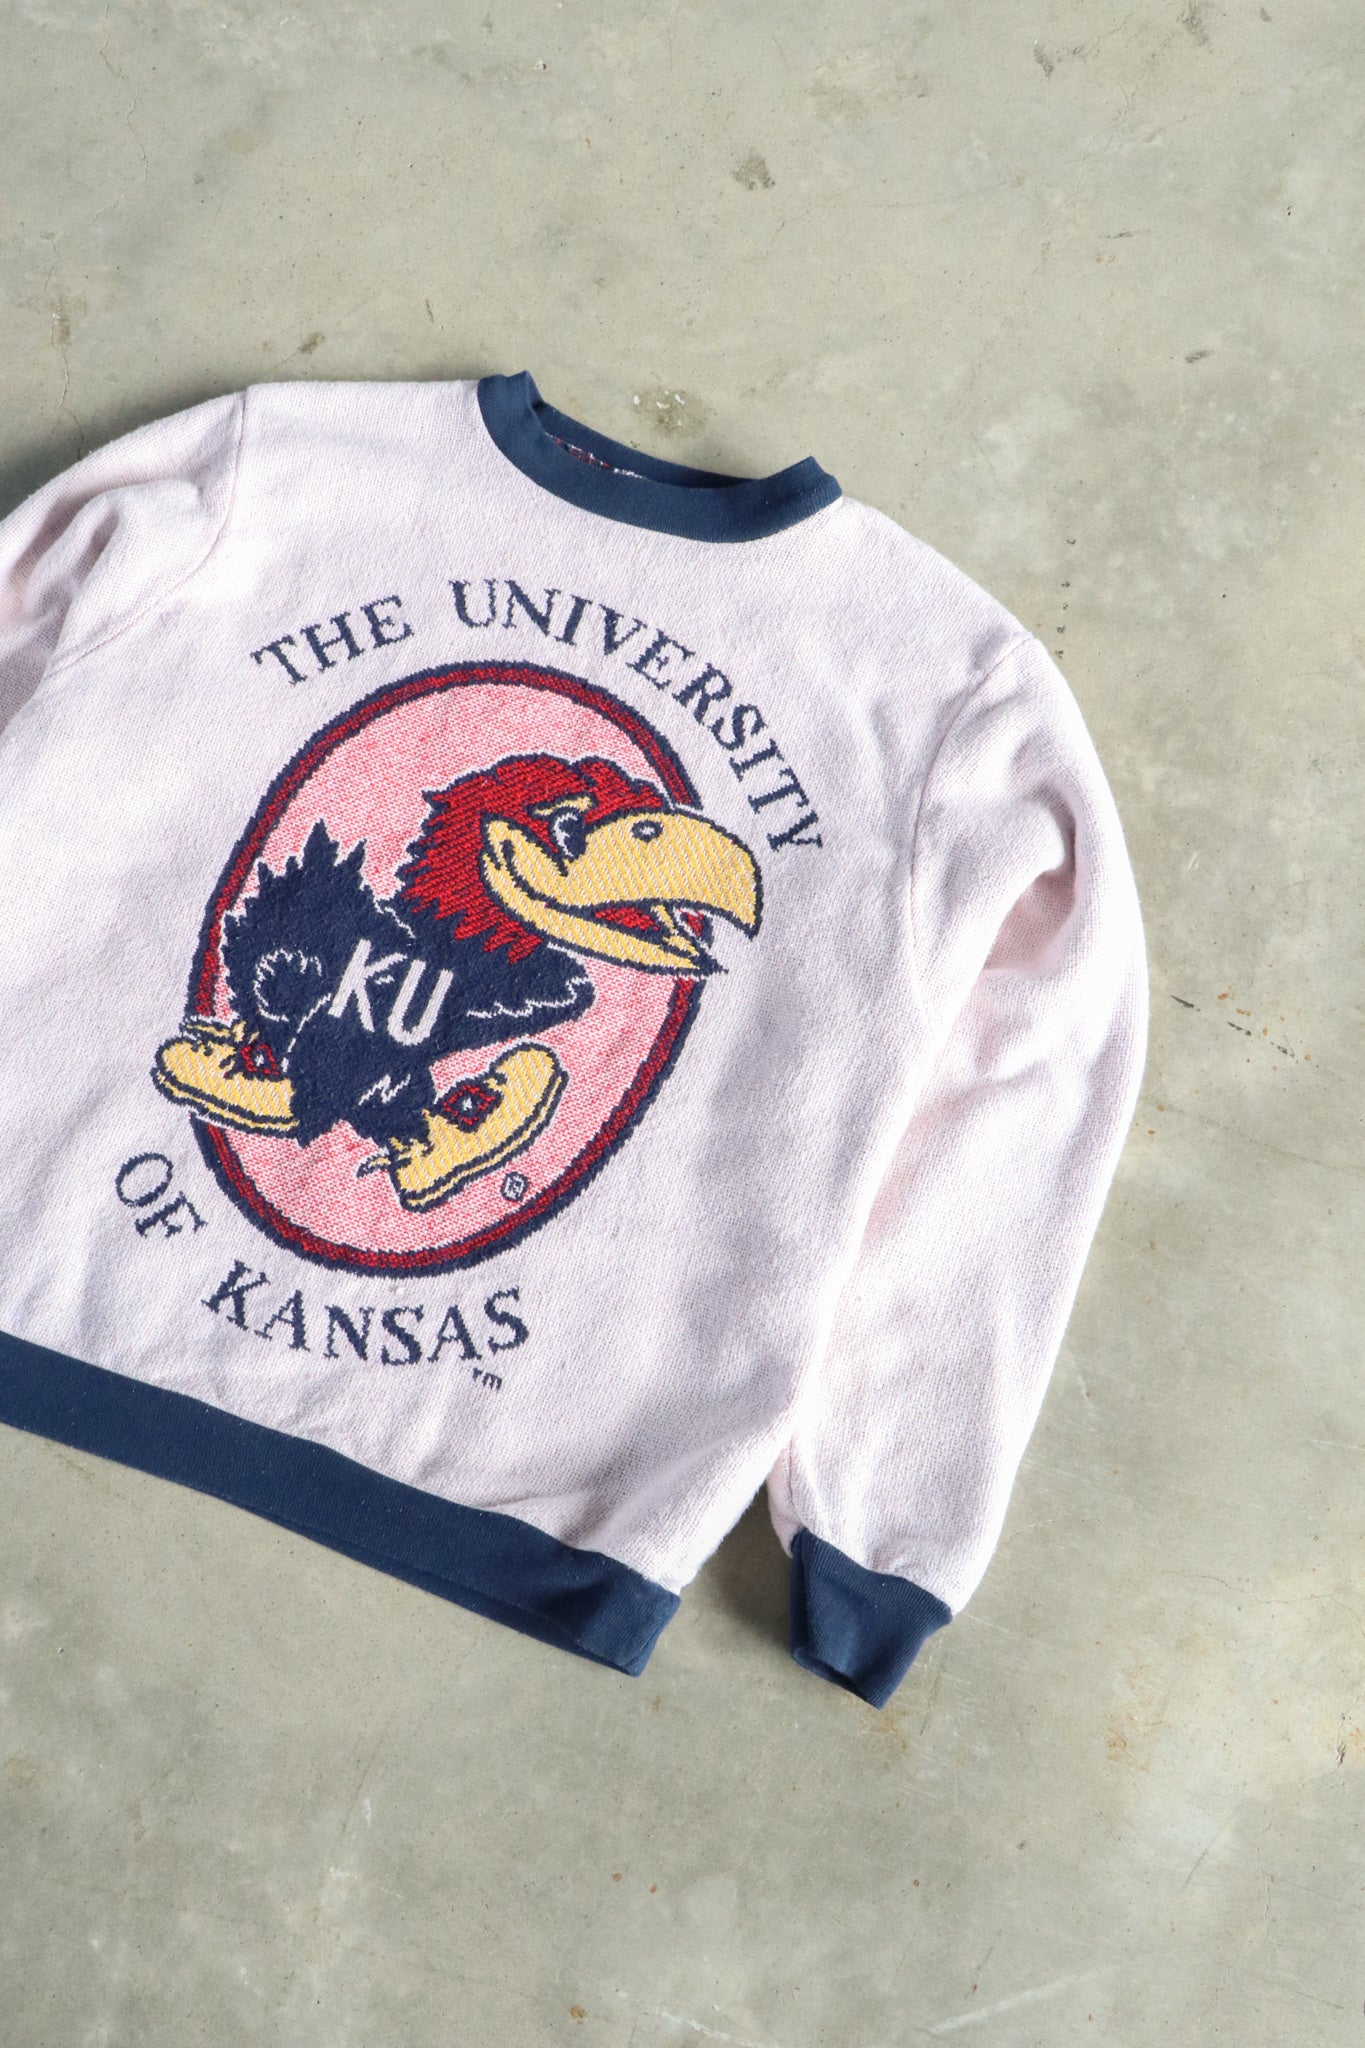 Vintage University of Kansas Knit Sweater Large